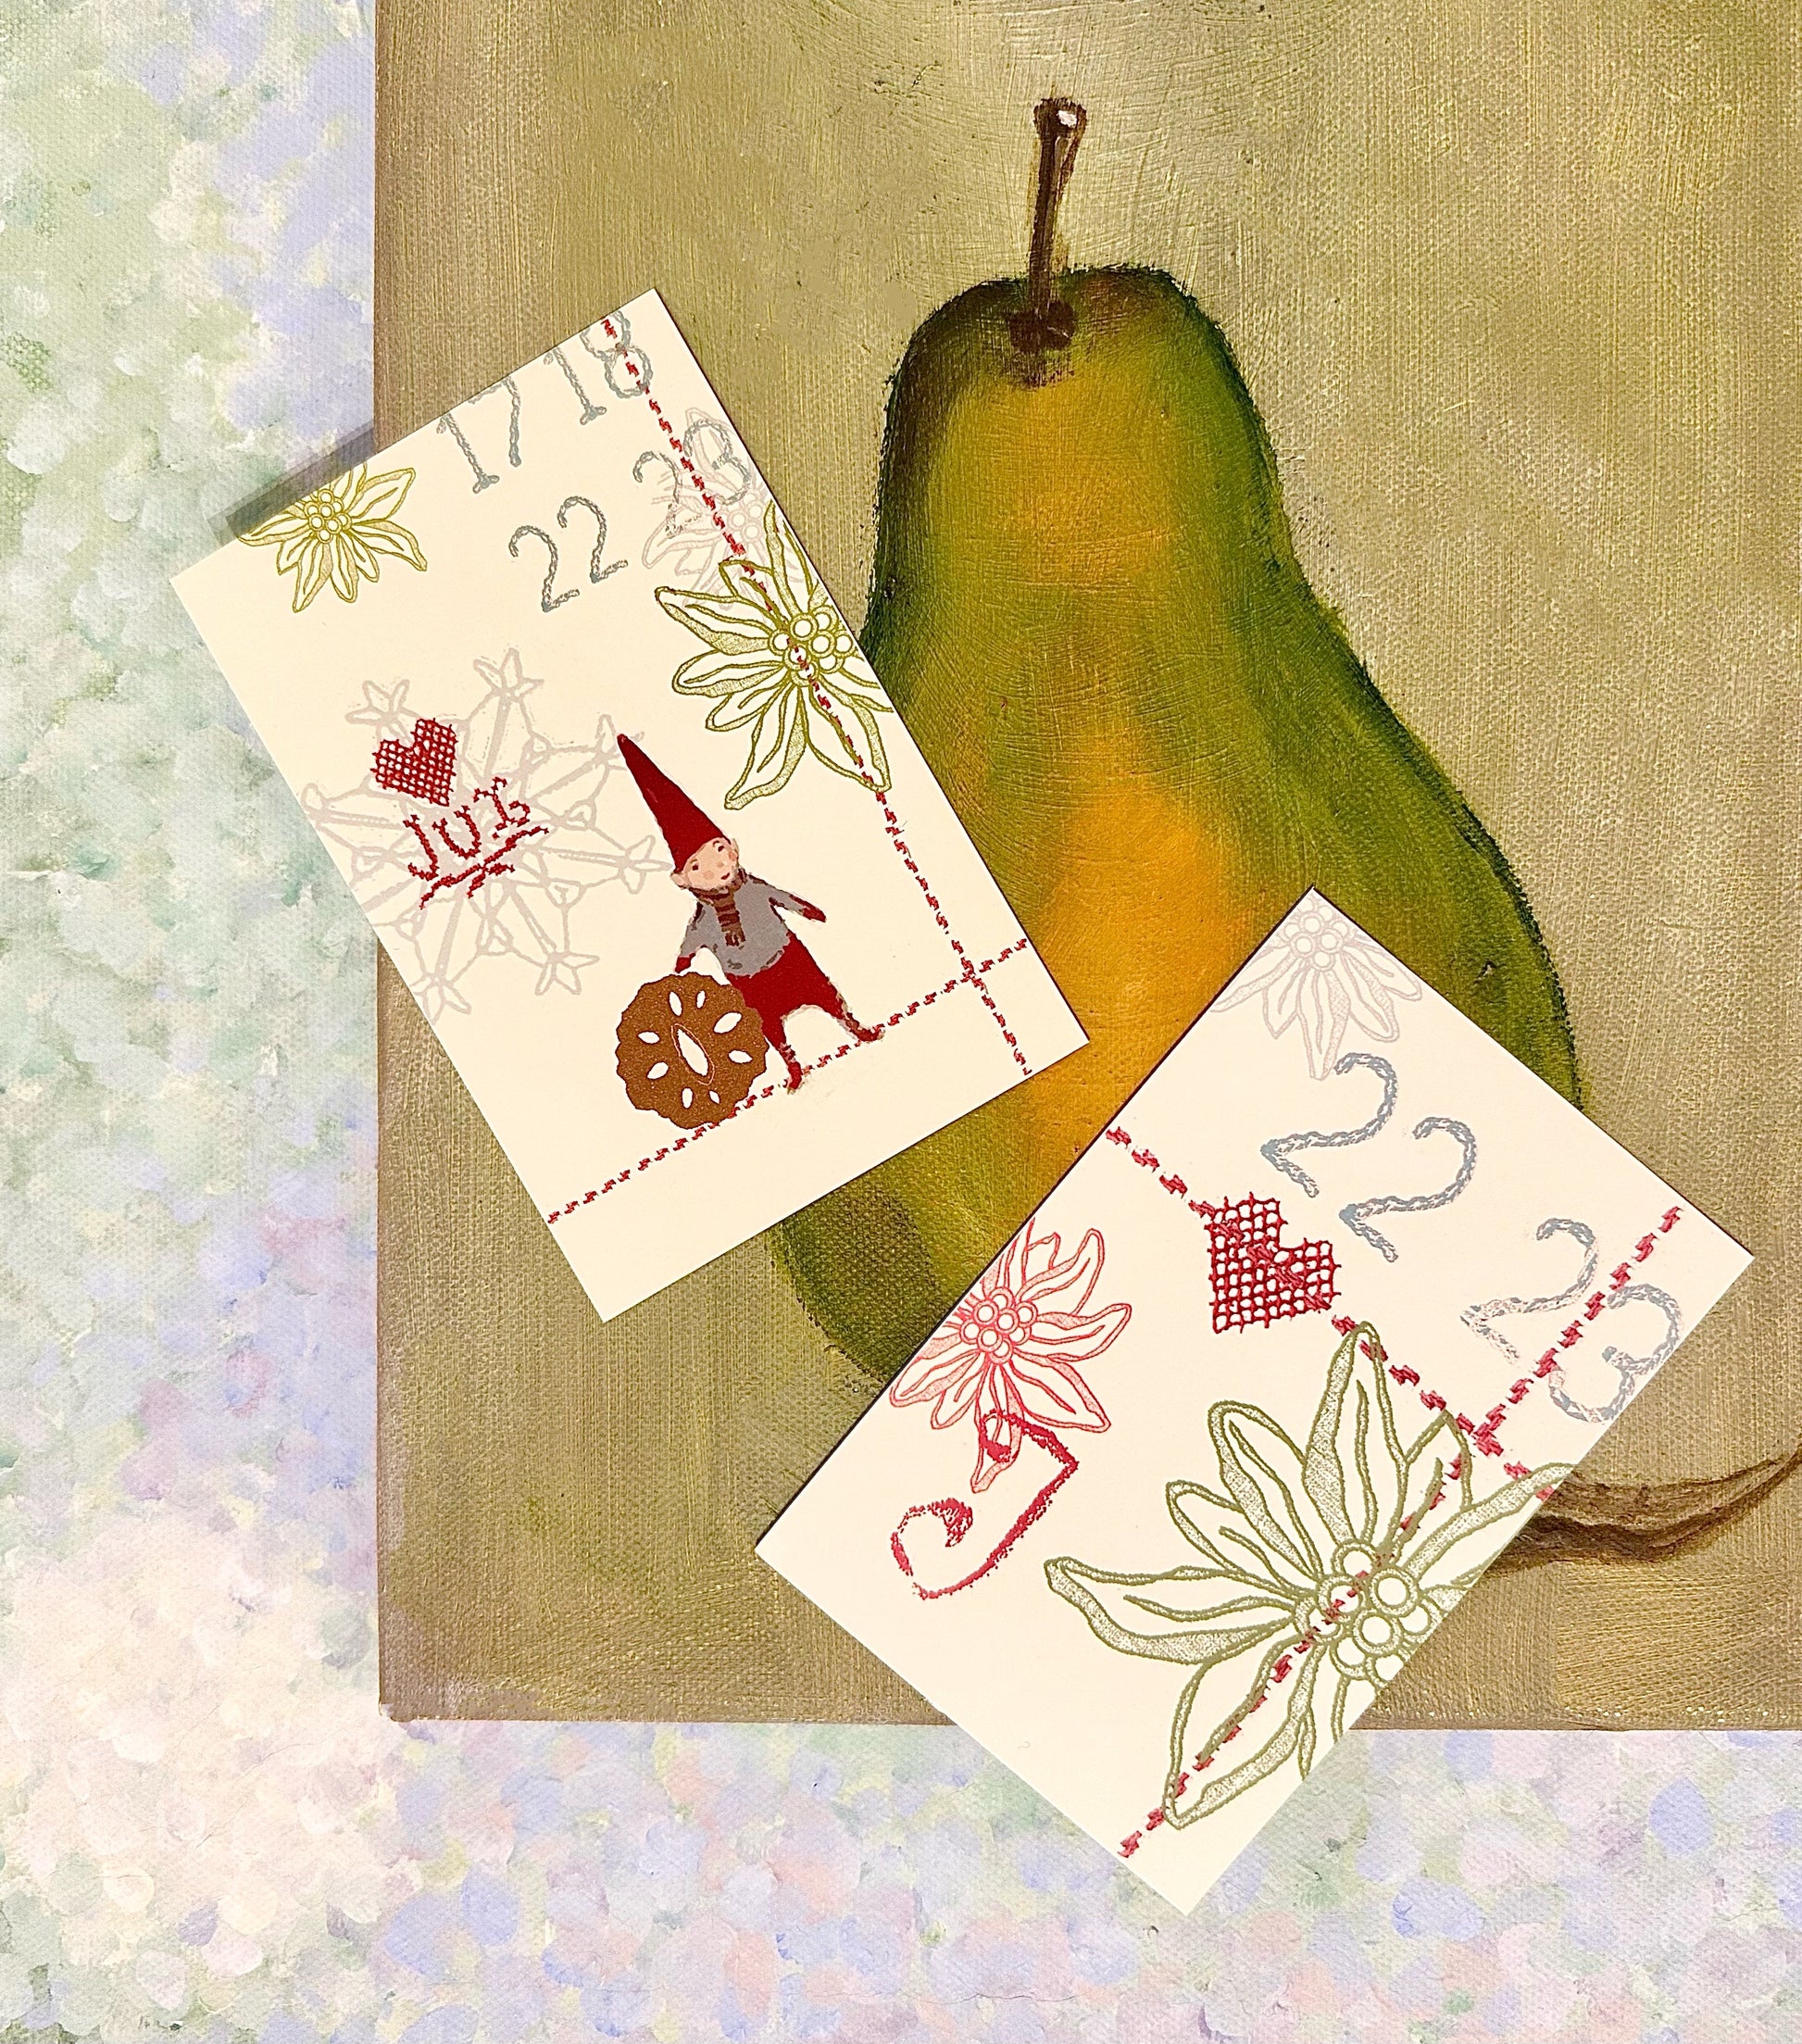 Small Christmas Card ”December Days” - 2009